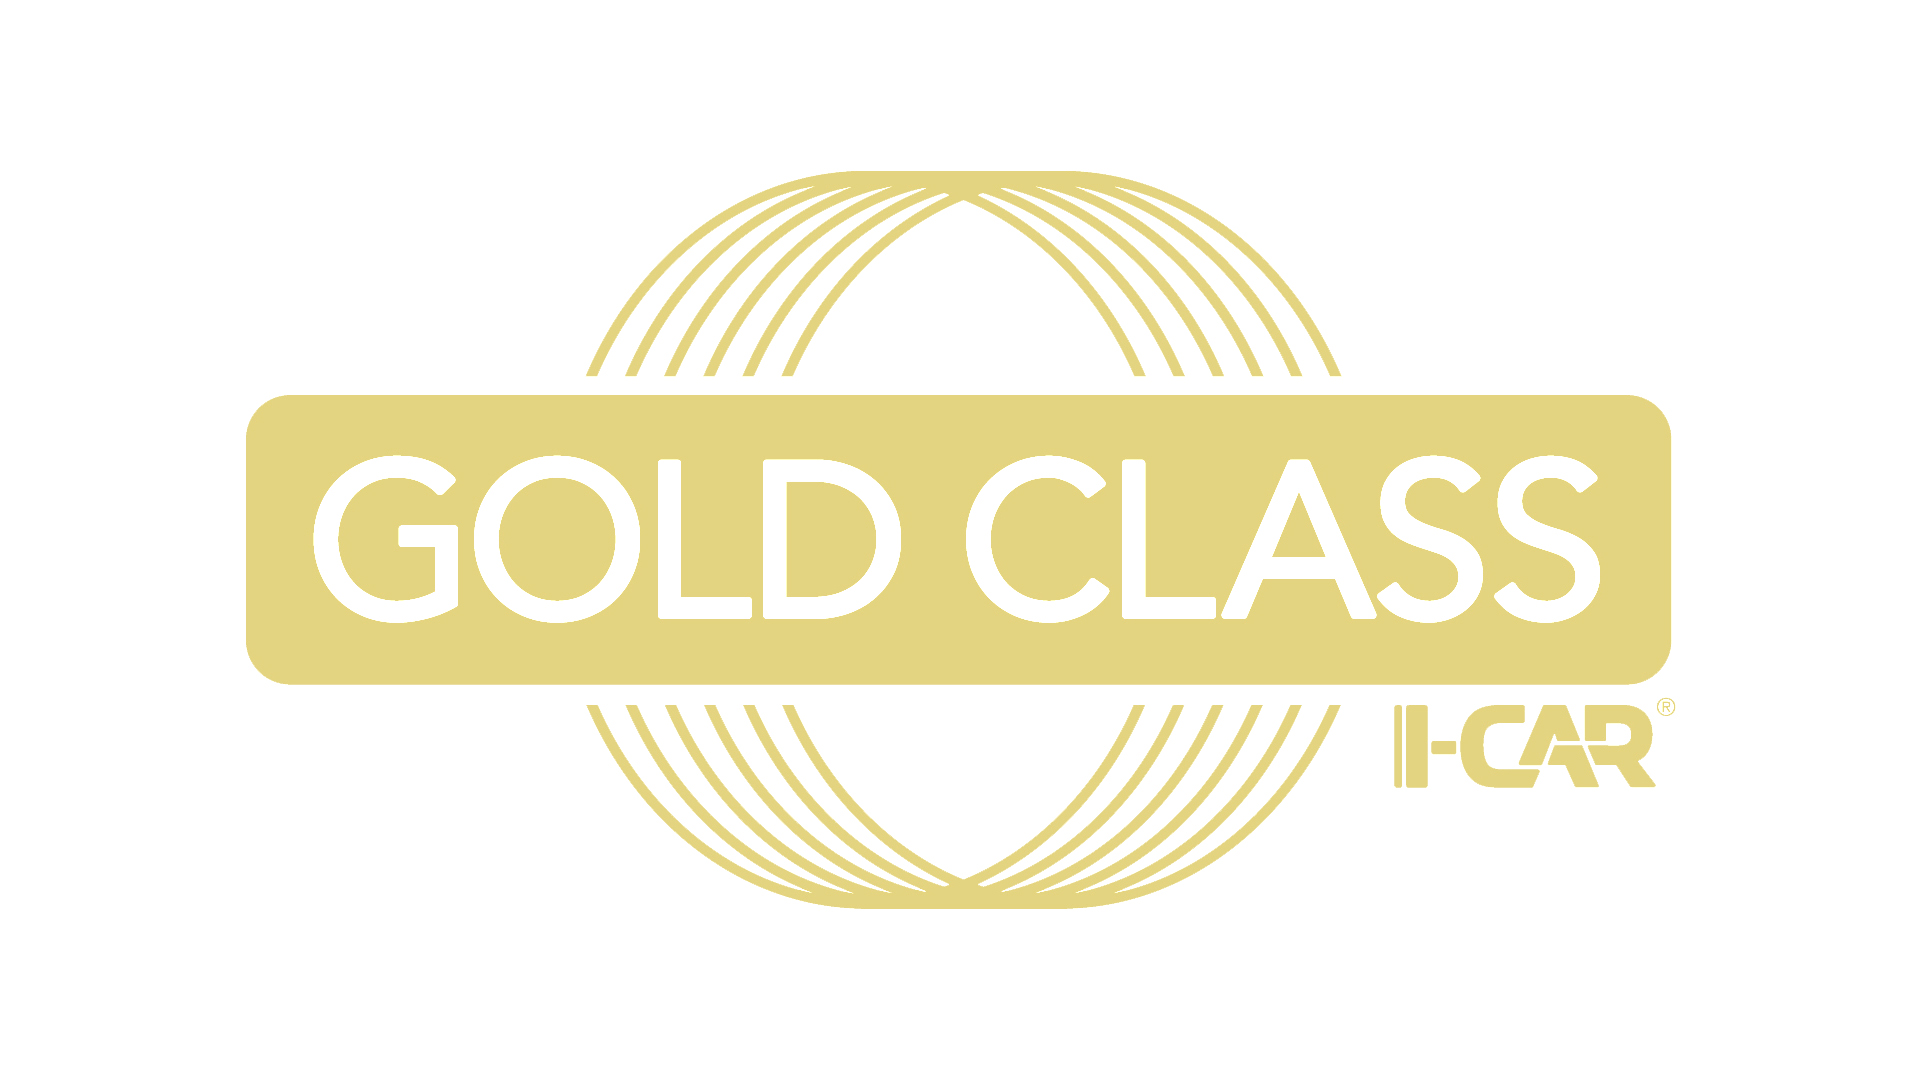 I-Car gold class logo